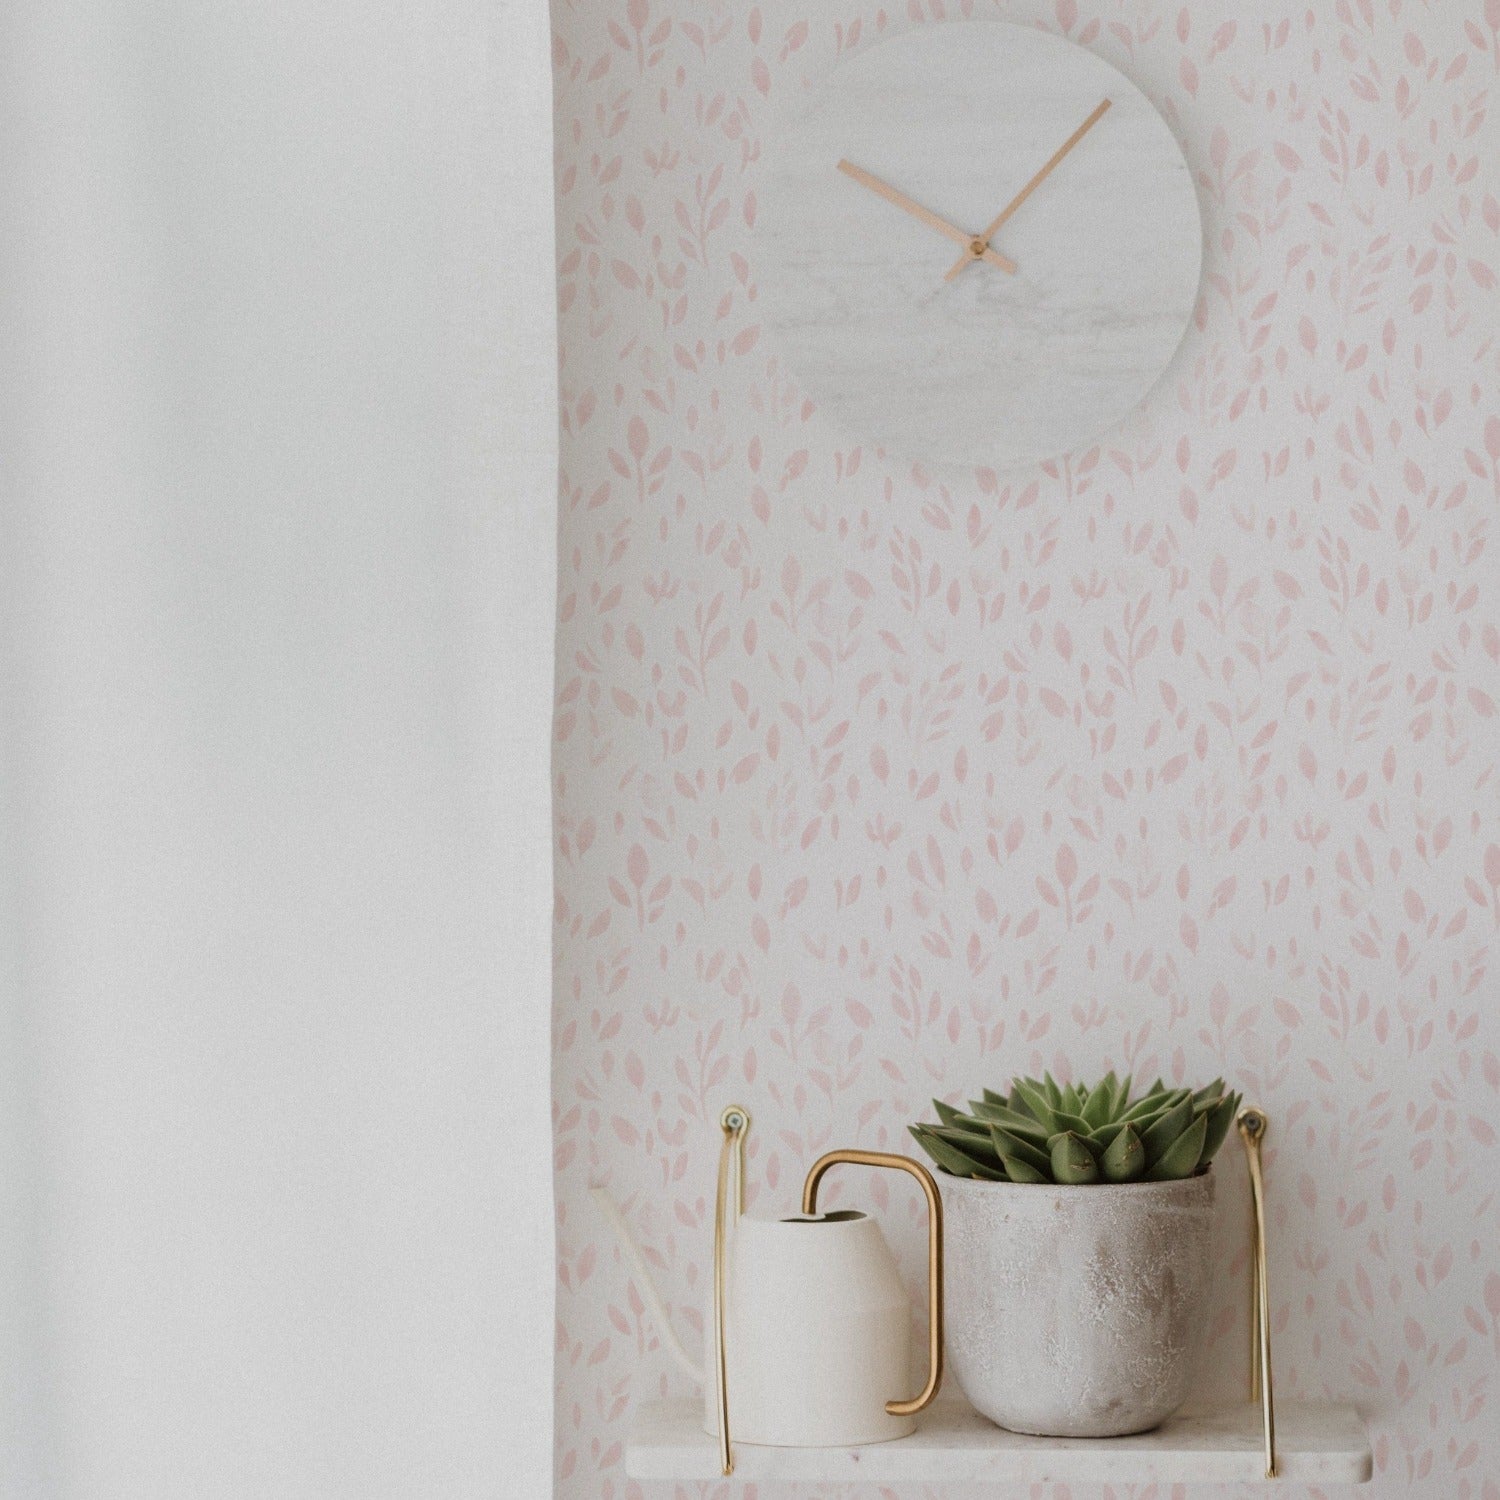 wallpaper, peel and stick wallpaper, Home decor, subtle botanica wallpaper, Floral wallpaper, bedroom wallpaper, blush wallpaper, pink wallpaper, 